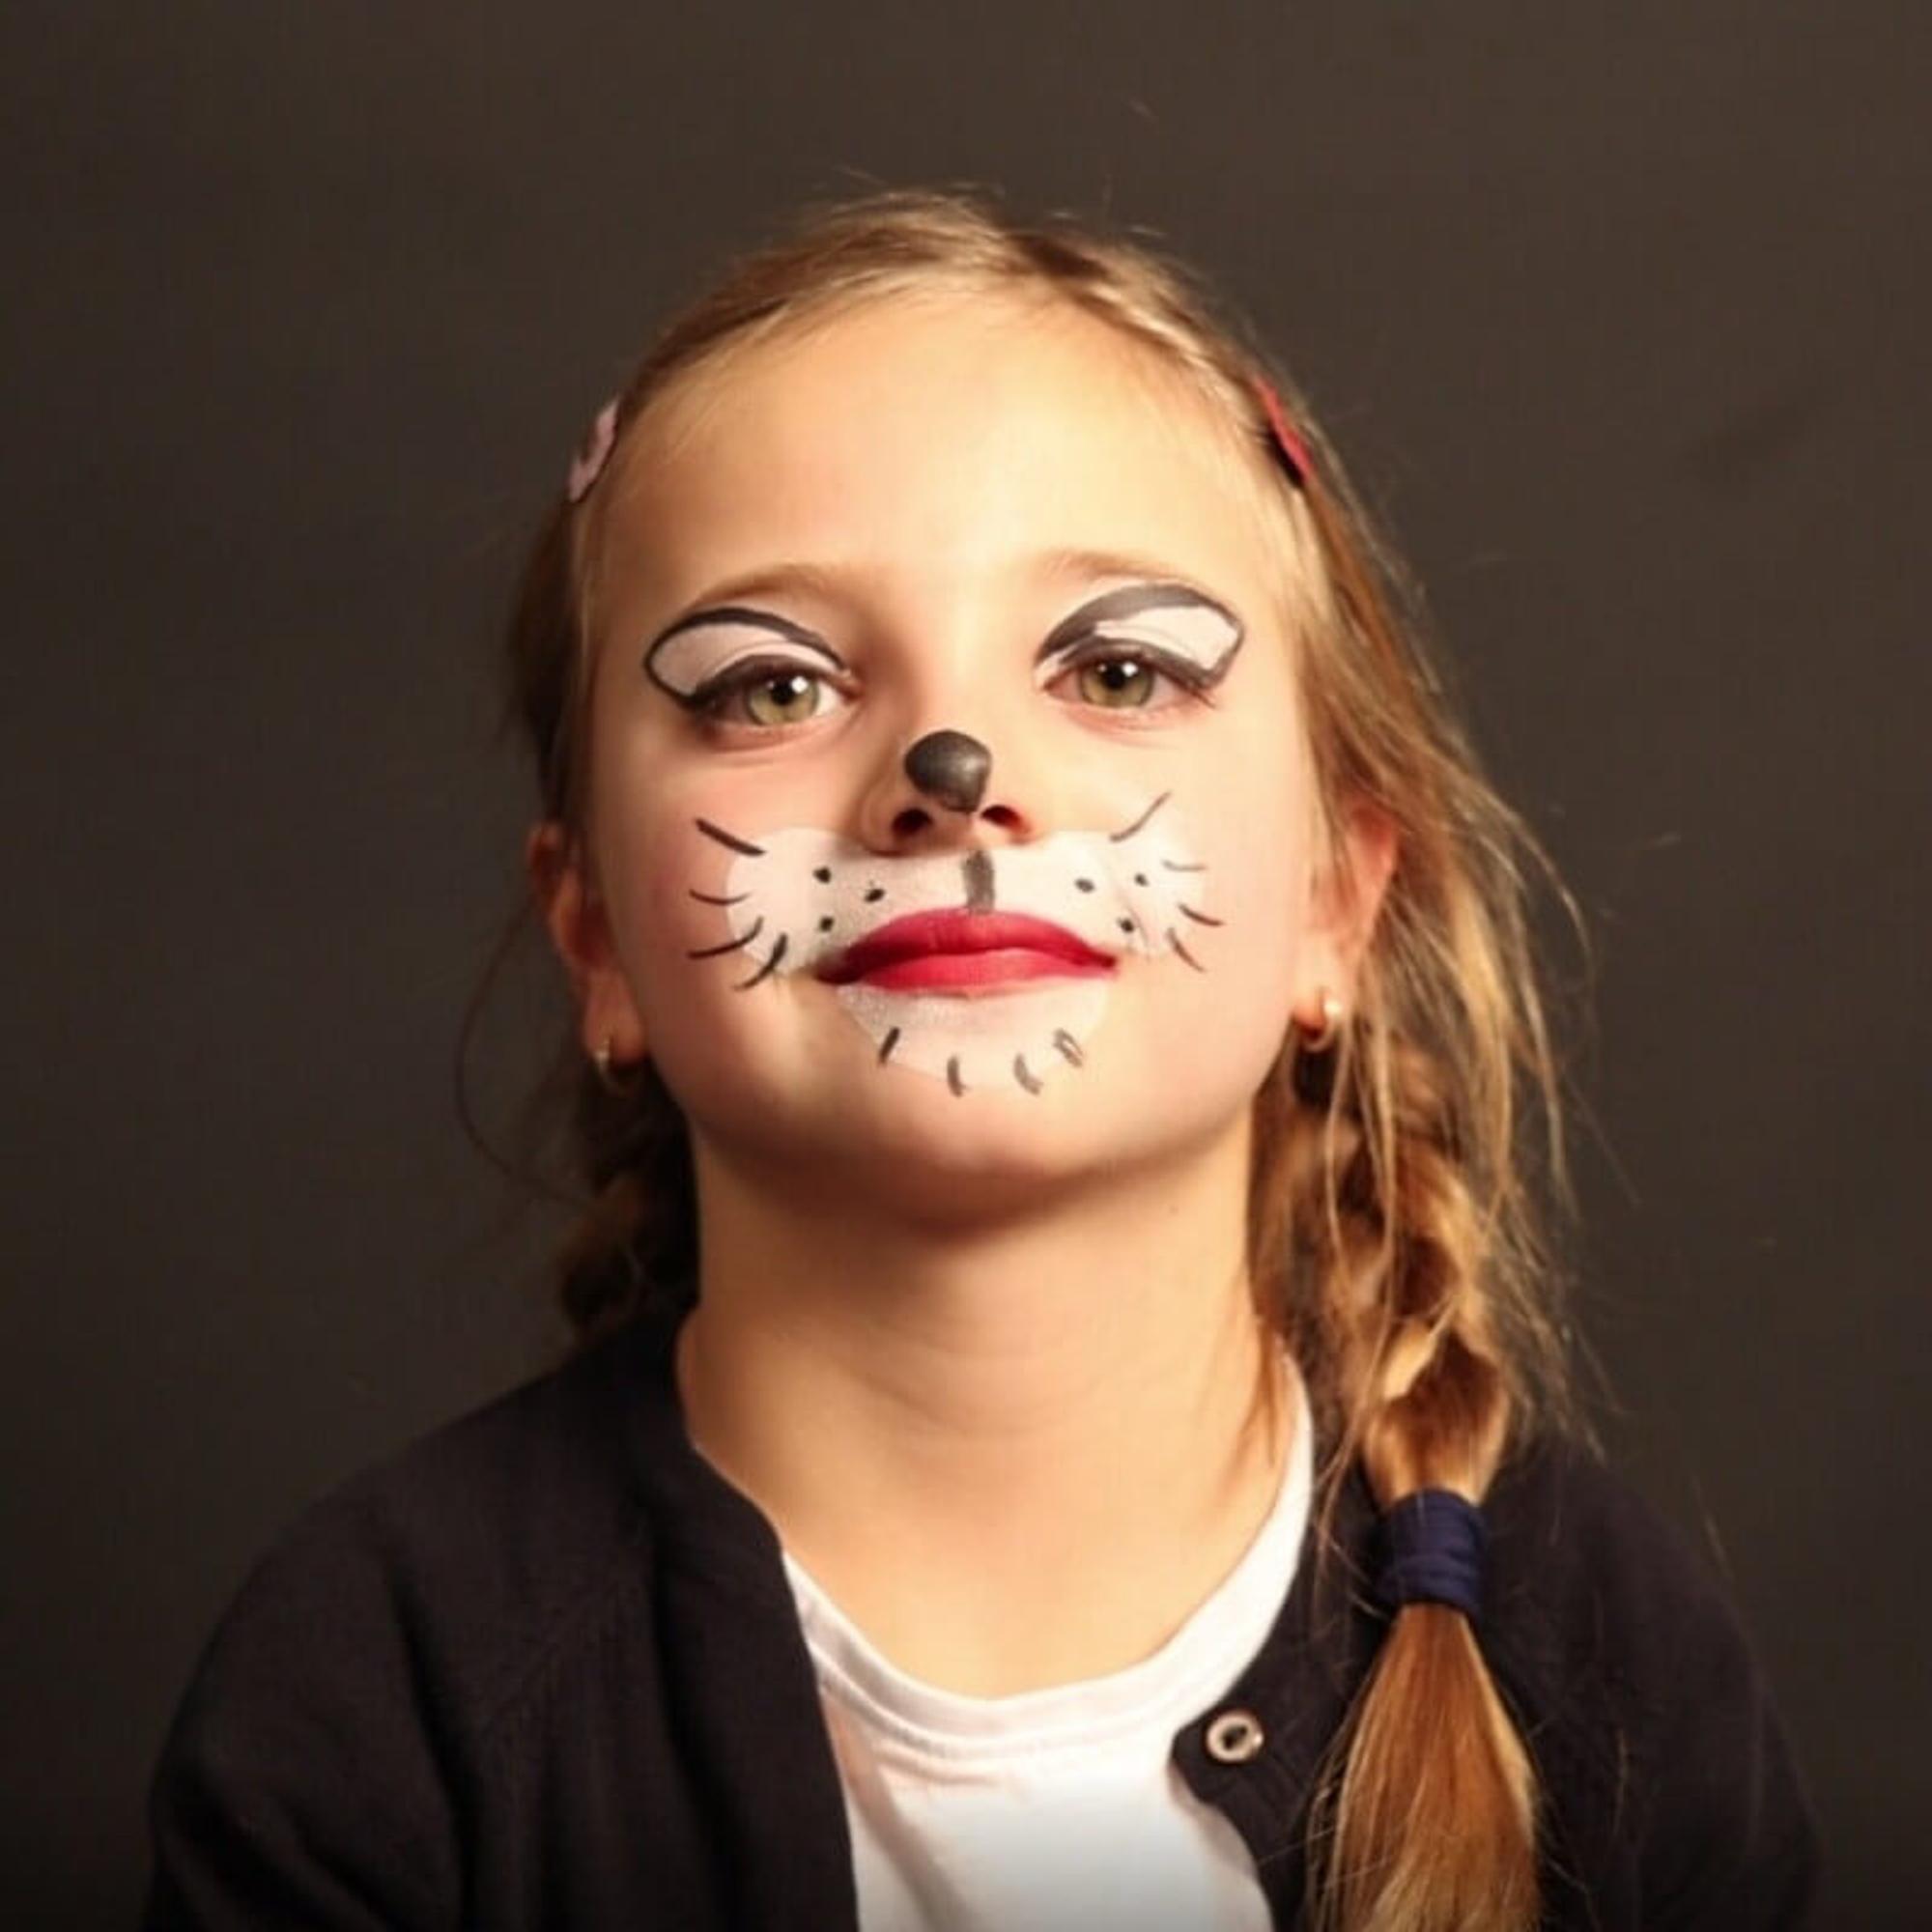 Kind als Katze schminken: fertiges Ergebnis